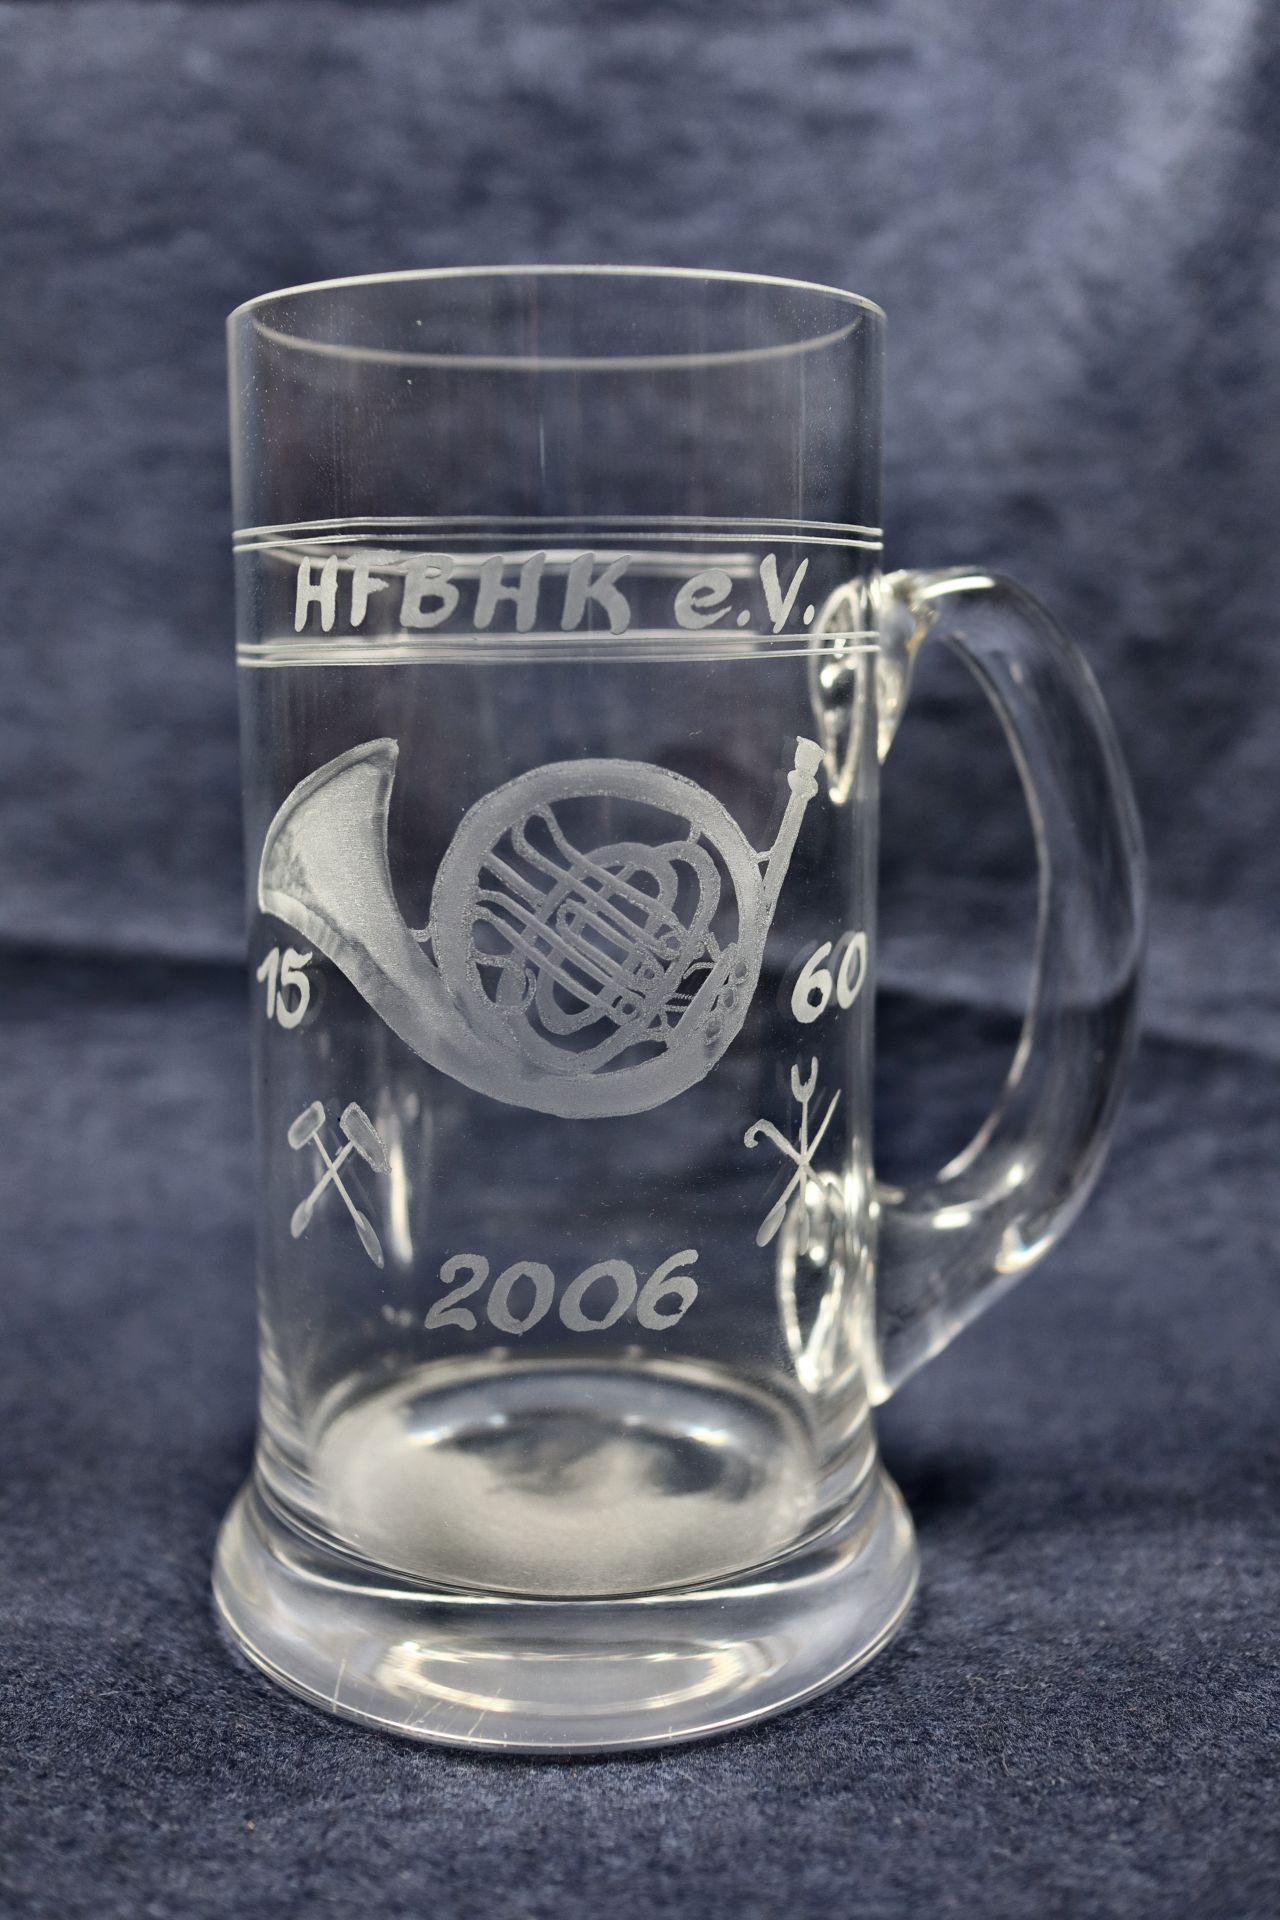 Humpen "HFBHK e.V. 2006" (Saxonia-Freiberg-Stiftung CC BY-NC-SA)